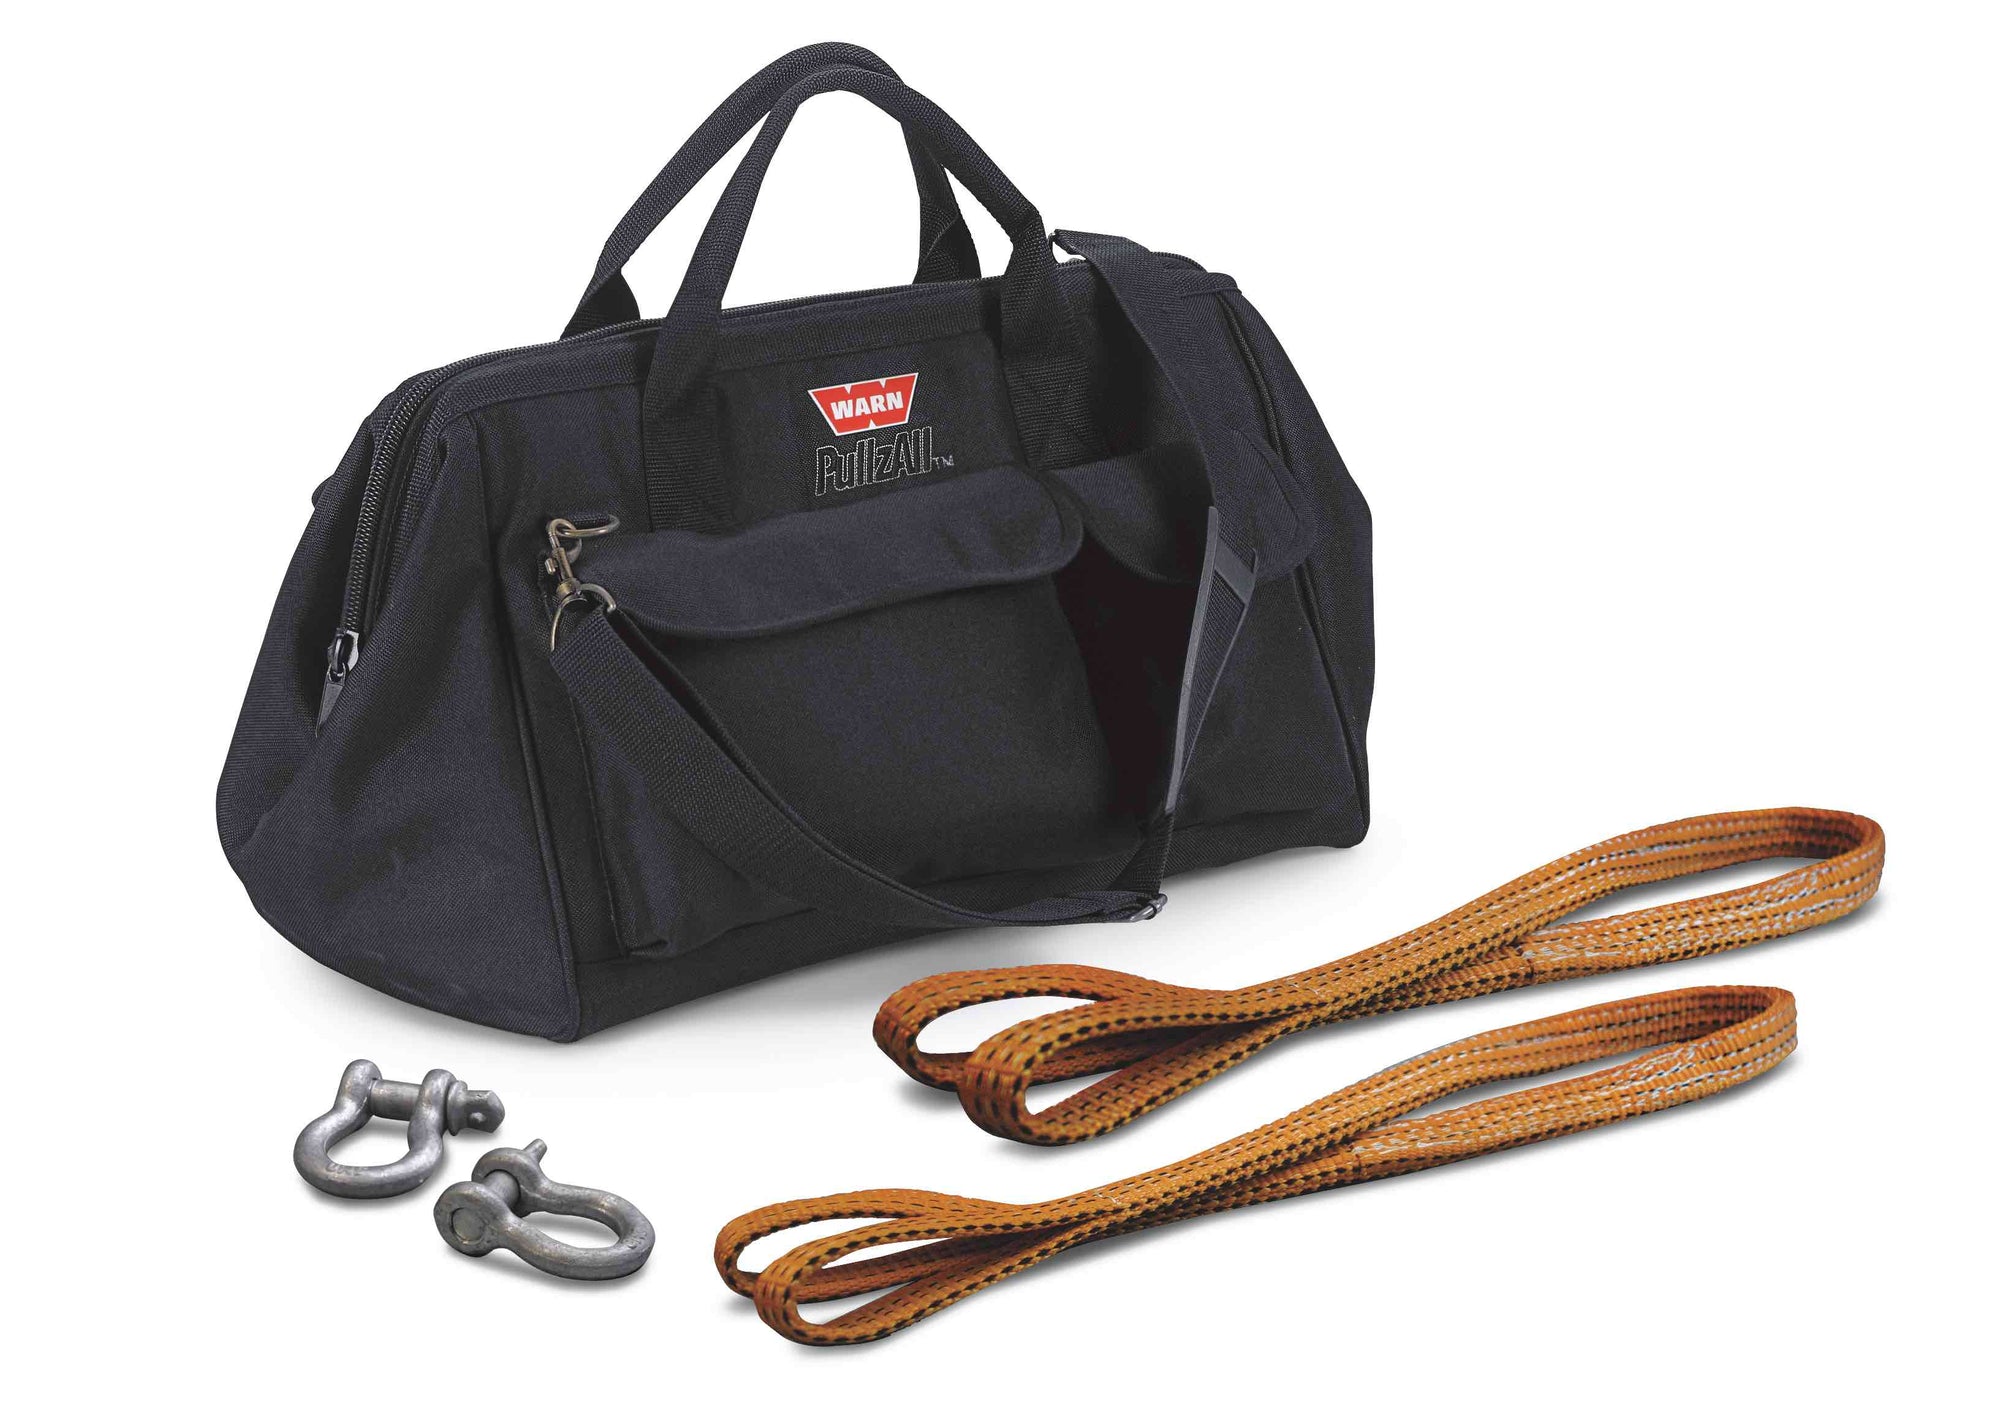 Pullzall Rigging Kit & Carrying Bag